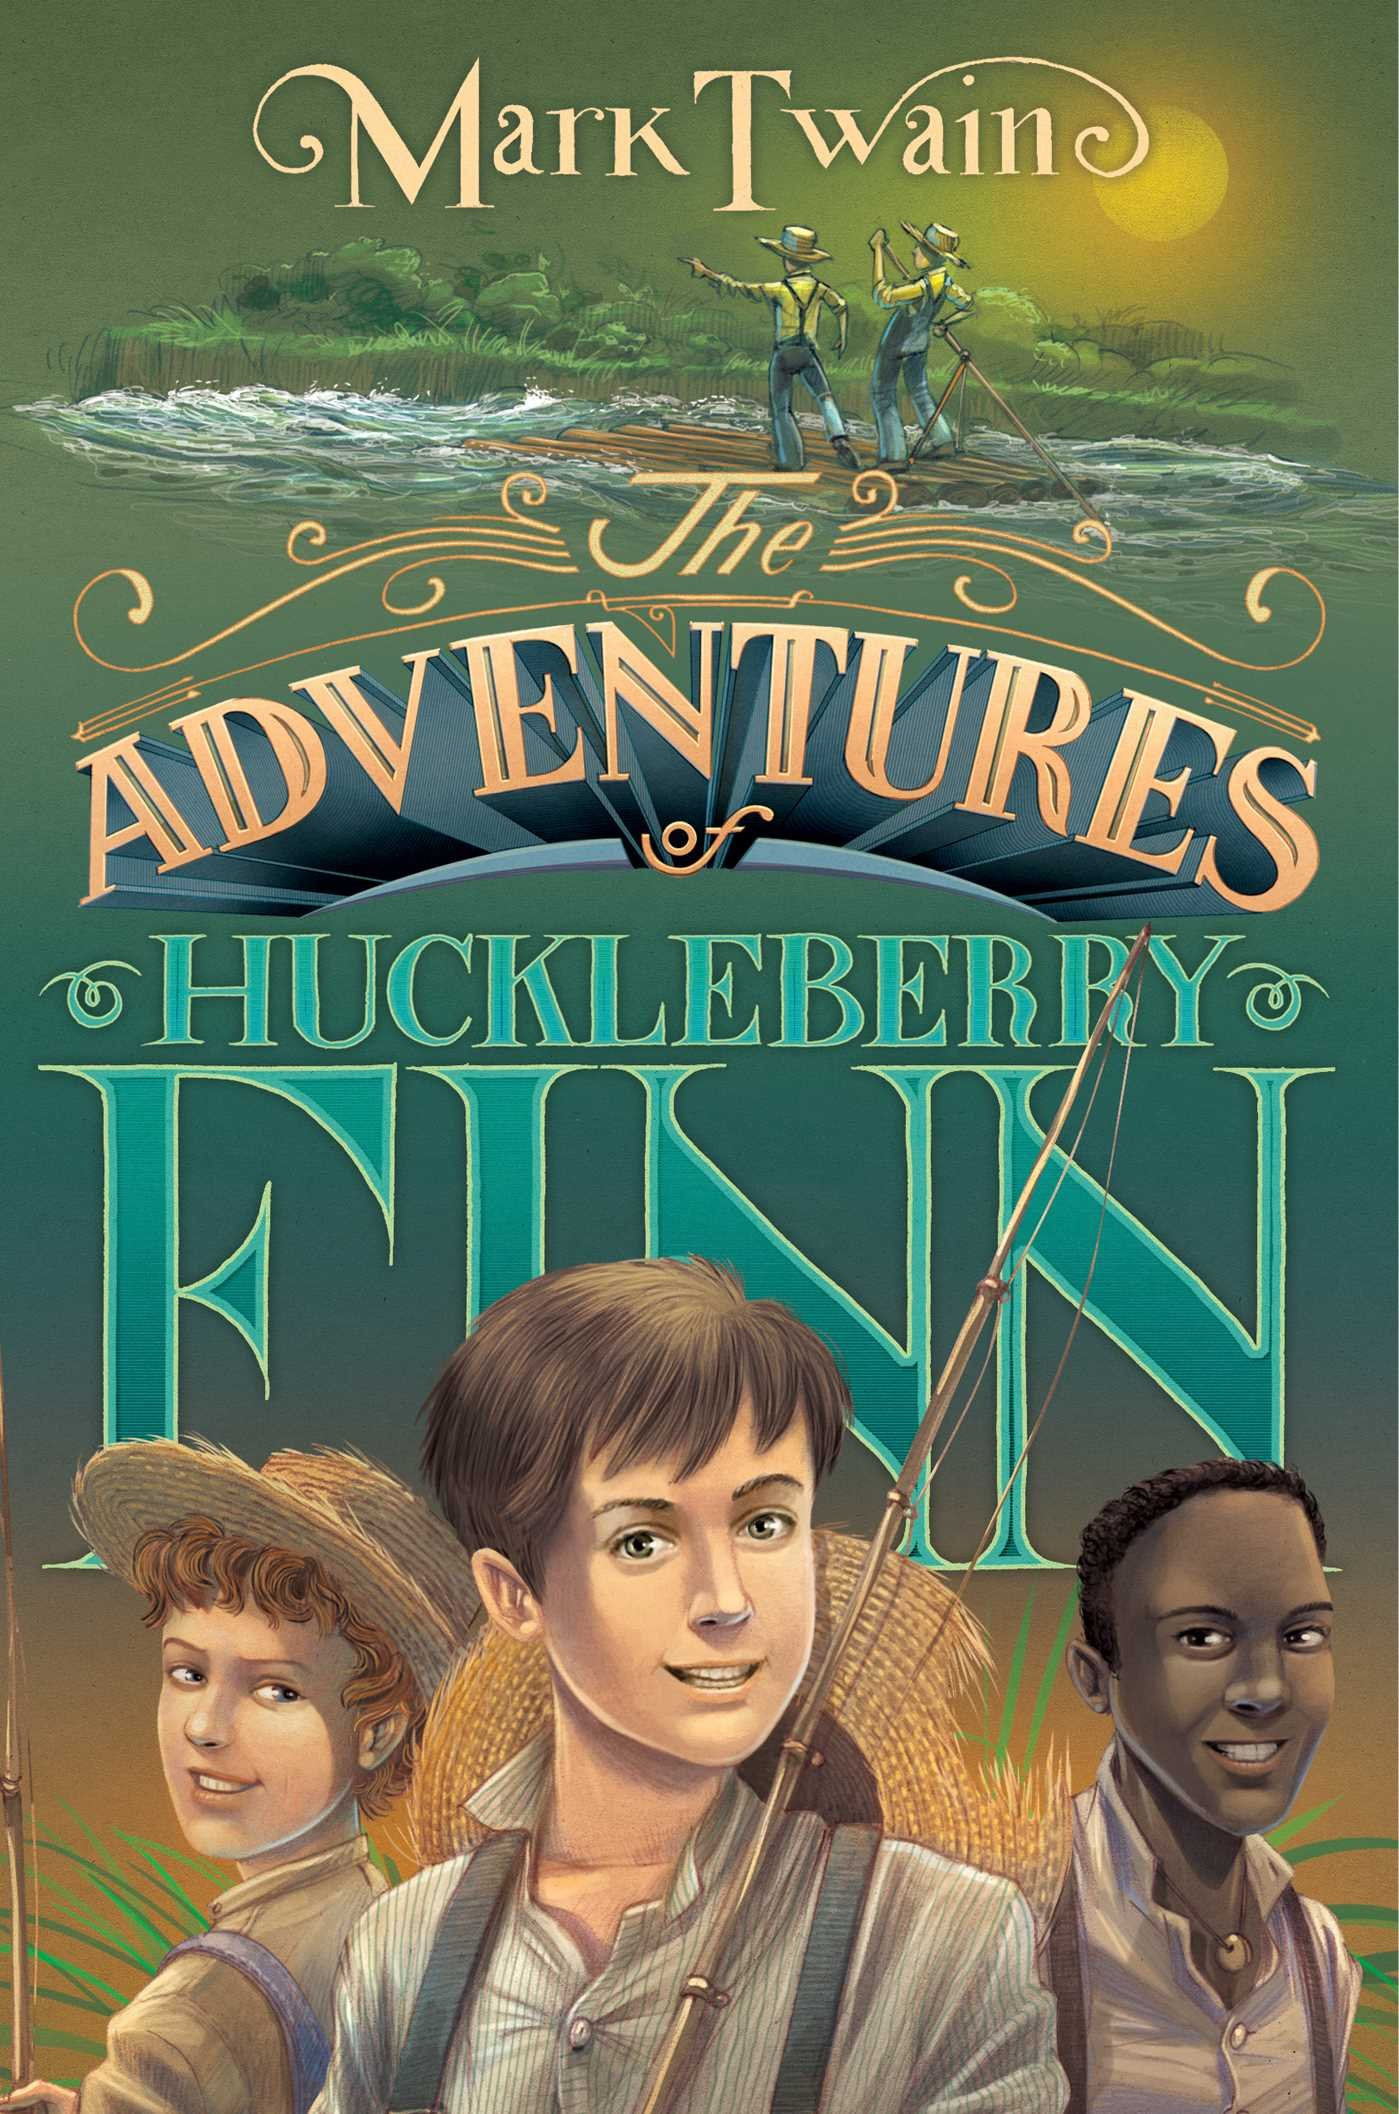 The Adventures of Huckleberry Finn for mac instal